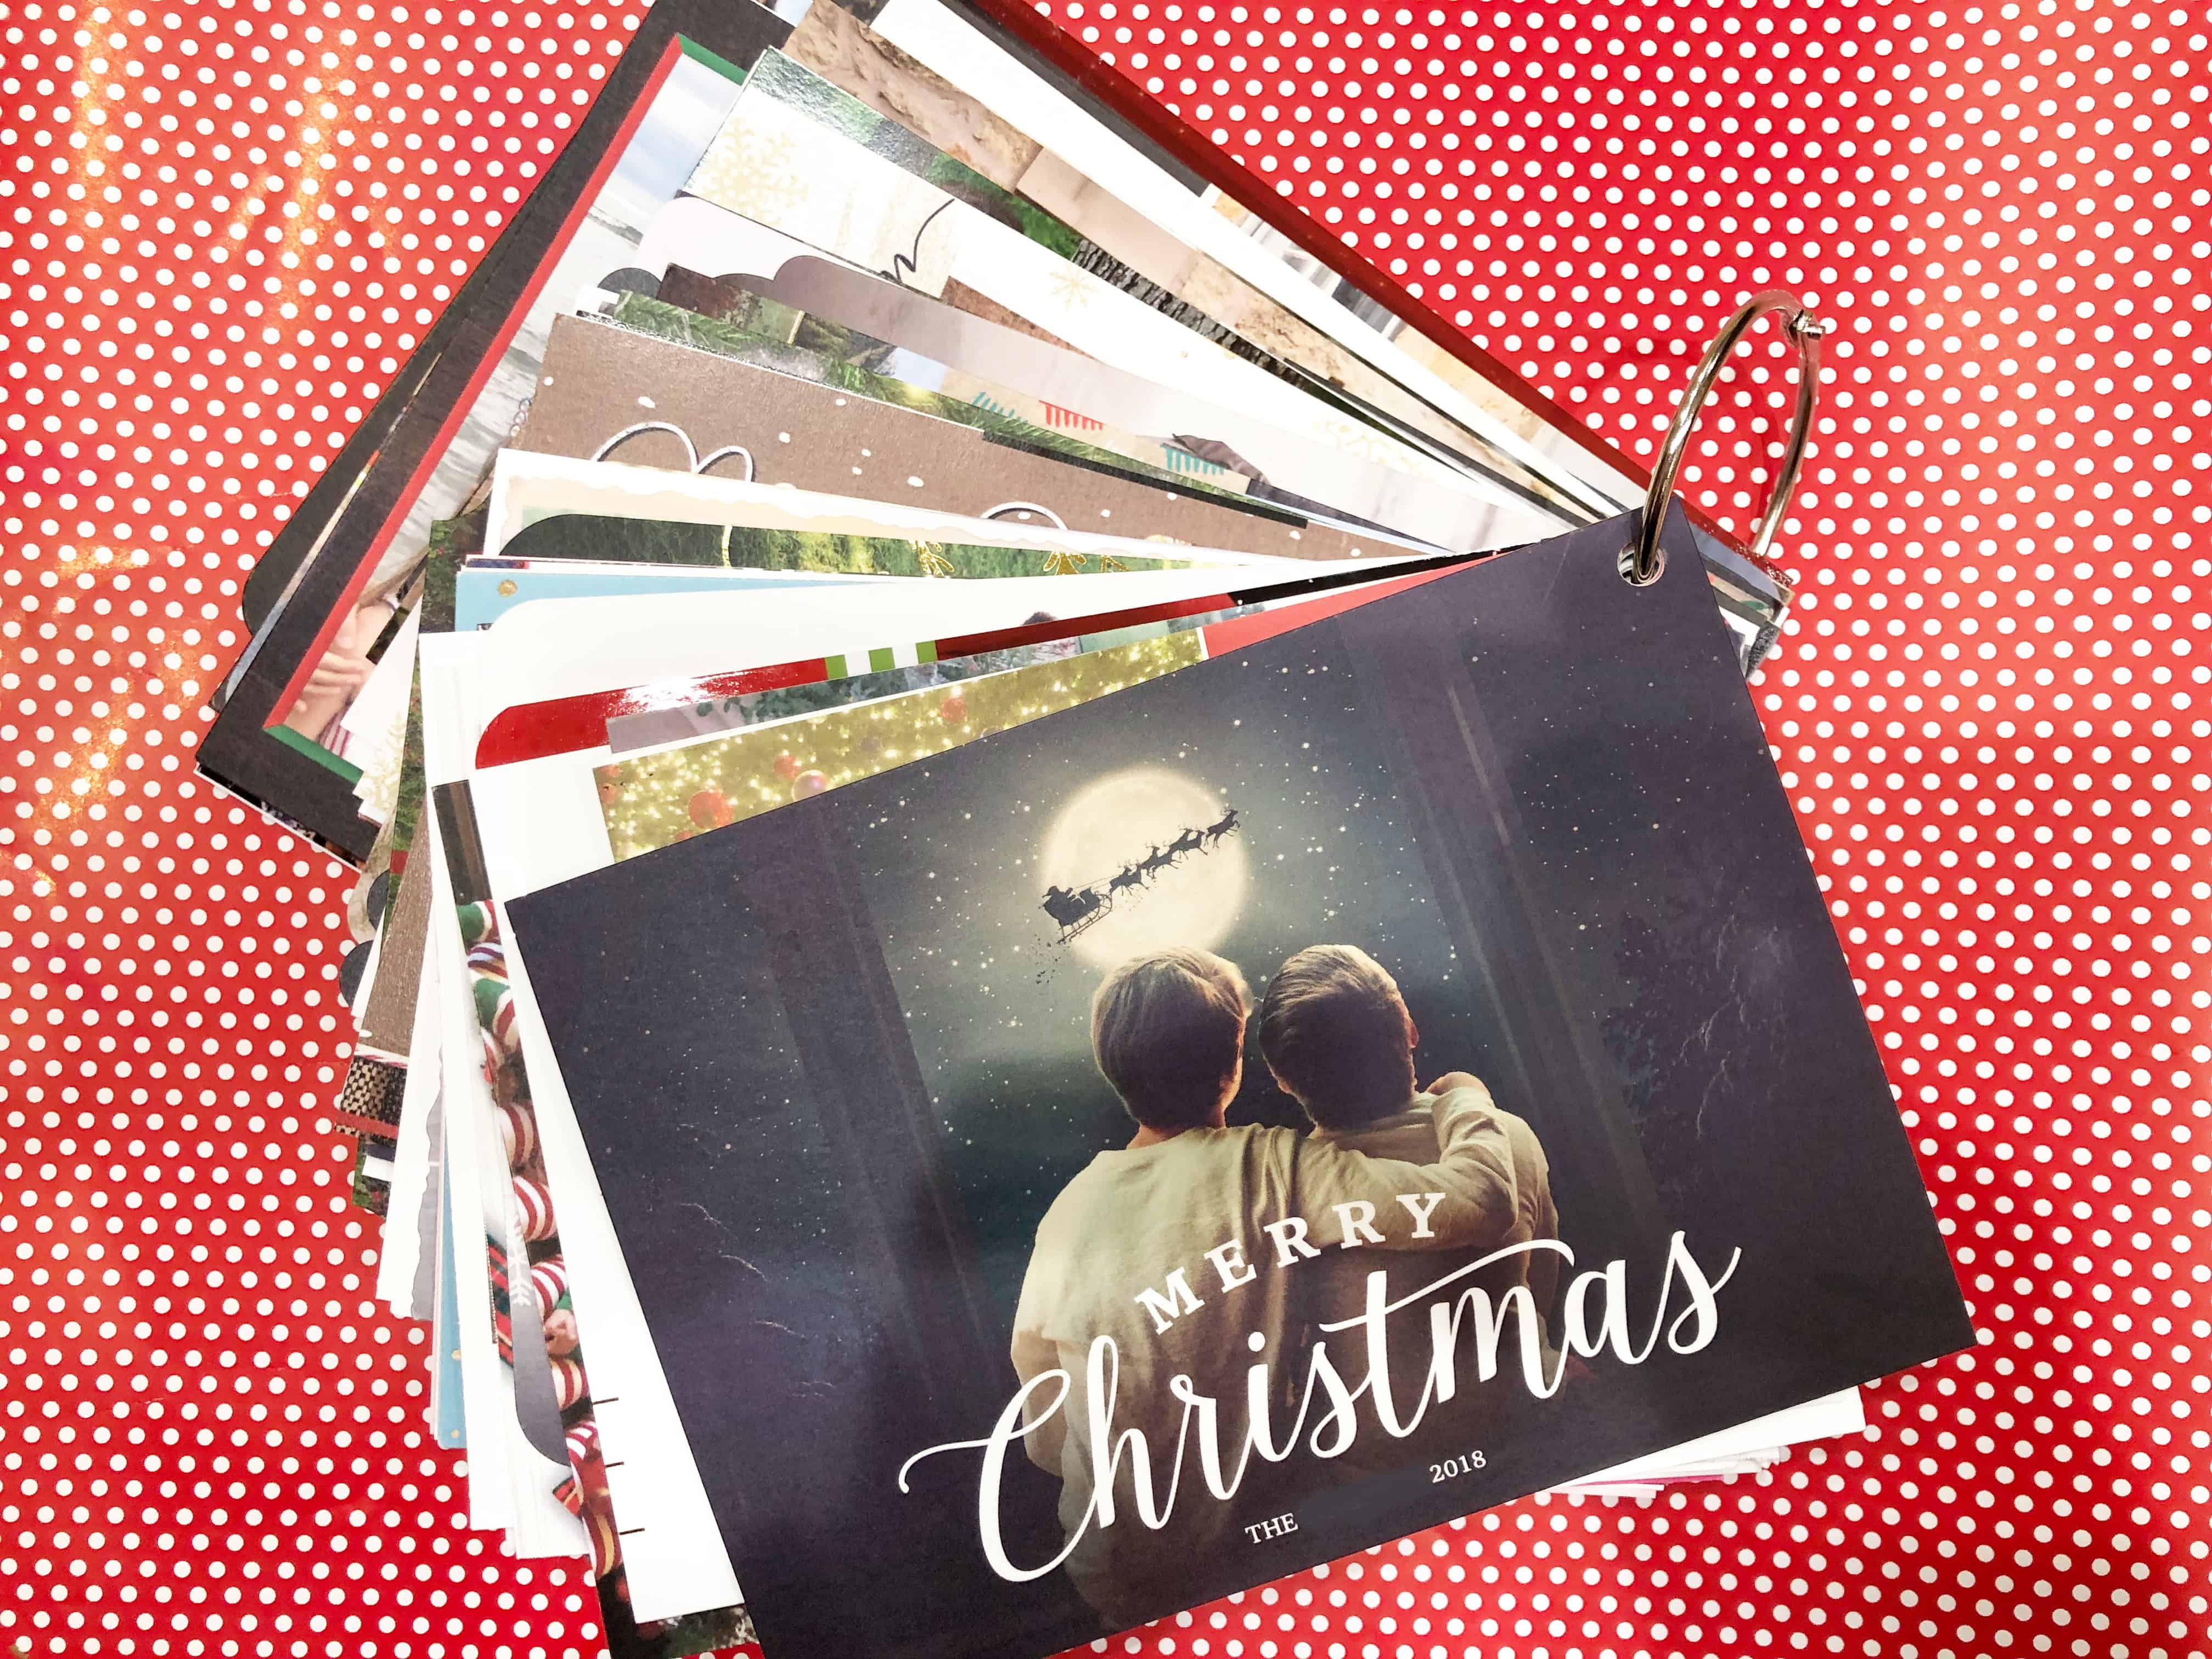 Christmas Photo Album, Christmas Binder, Christmas Cards Album